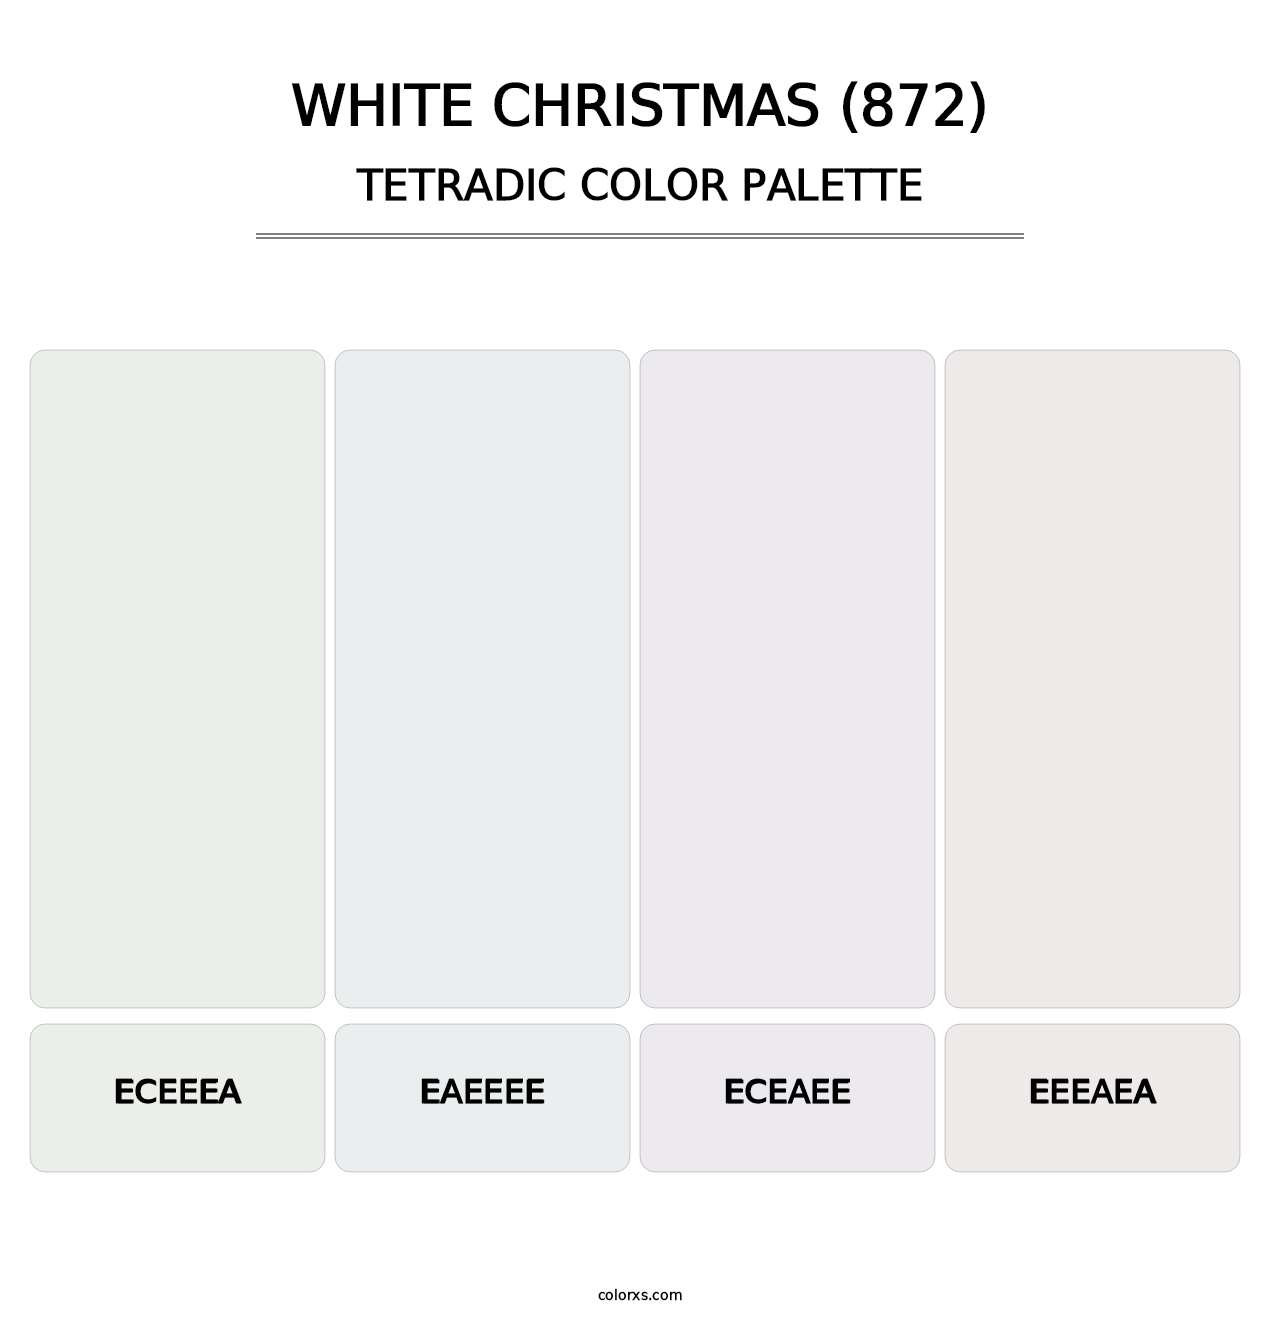 White Christmas (872) - Tetradic Color Palette